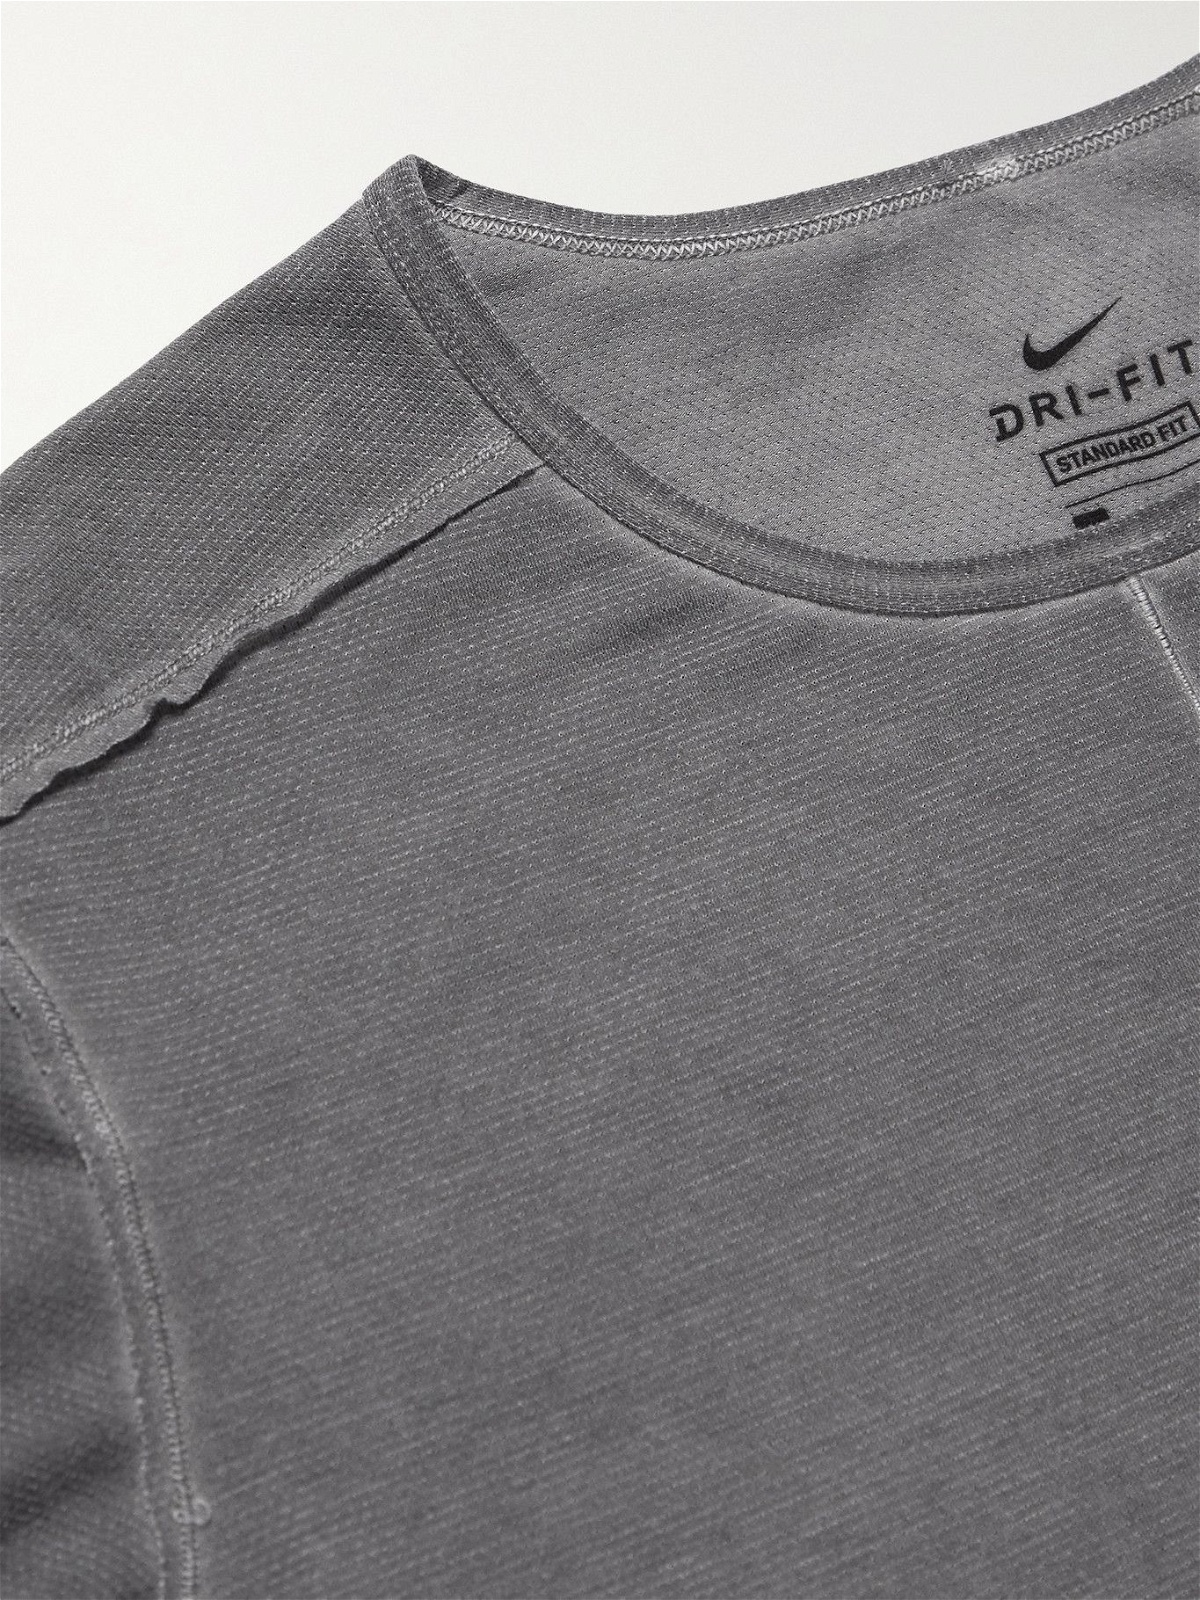 Nike Yoga Dri-FIT T-shirt in black